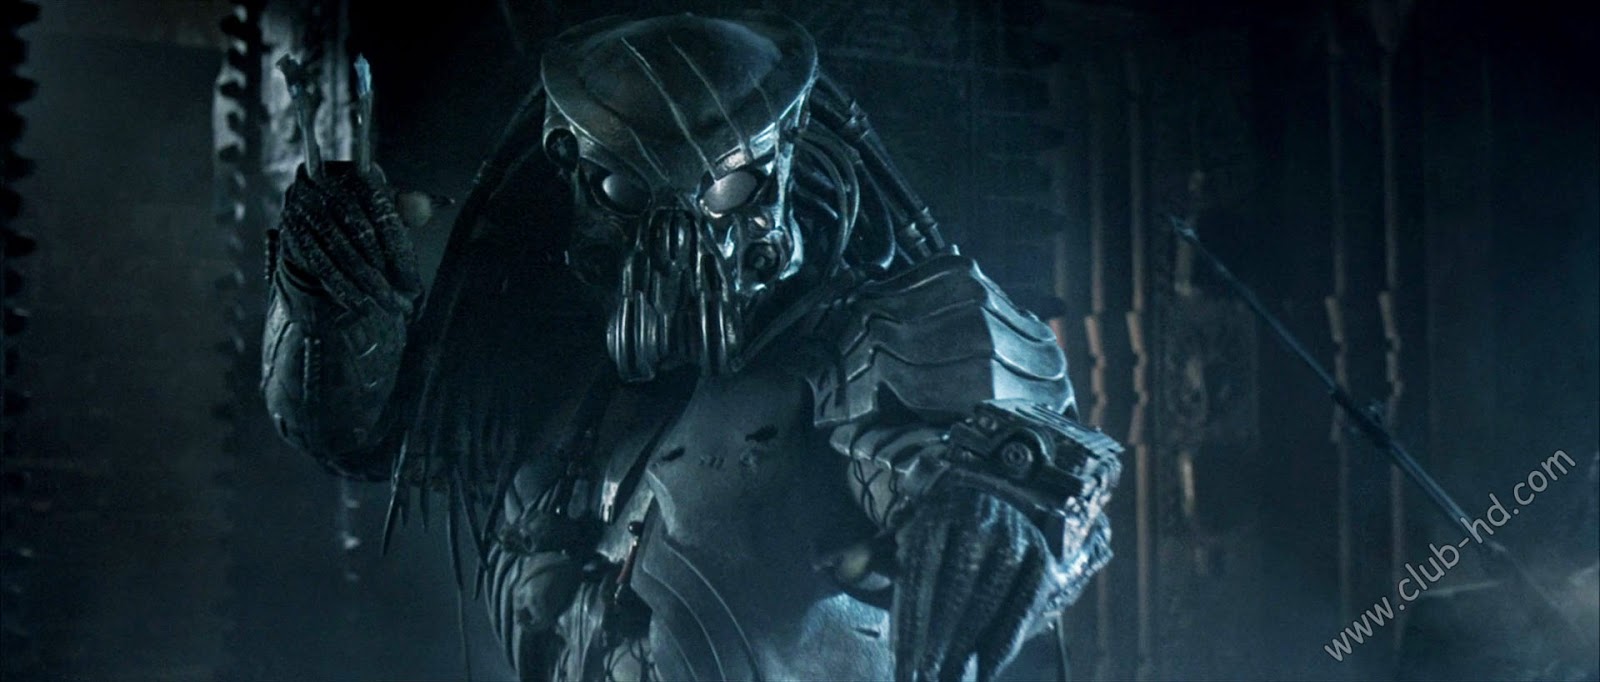 Alien_vs_Predator_UNRATED_CAPTURA-9.jpg